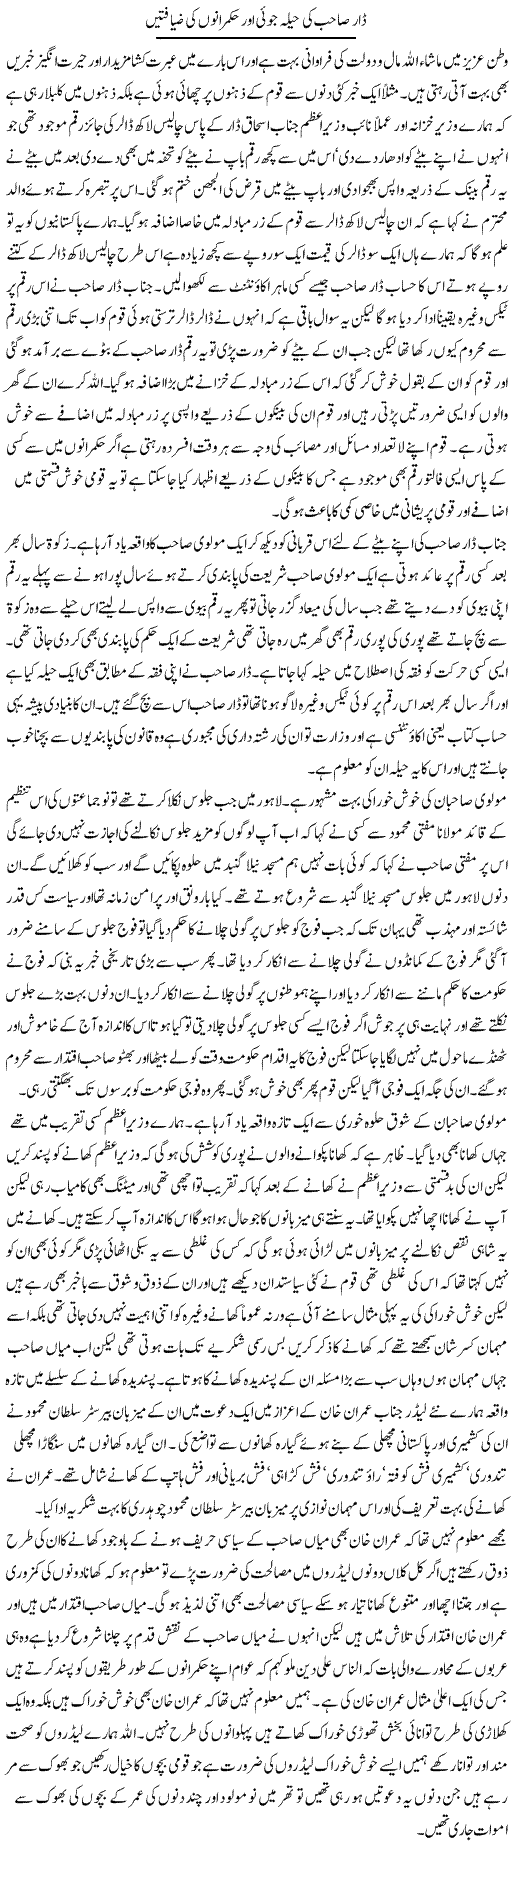 Dar Sahib Ki Haila Joi Our Hukmarano Ki Ziaftain | Abdul Qadir Hassan | Daily Urdu Columns